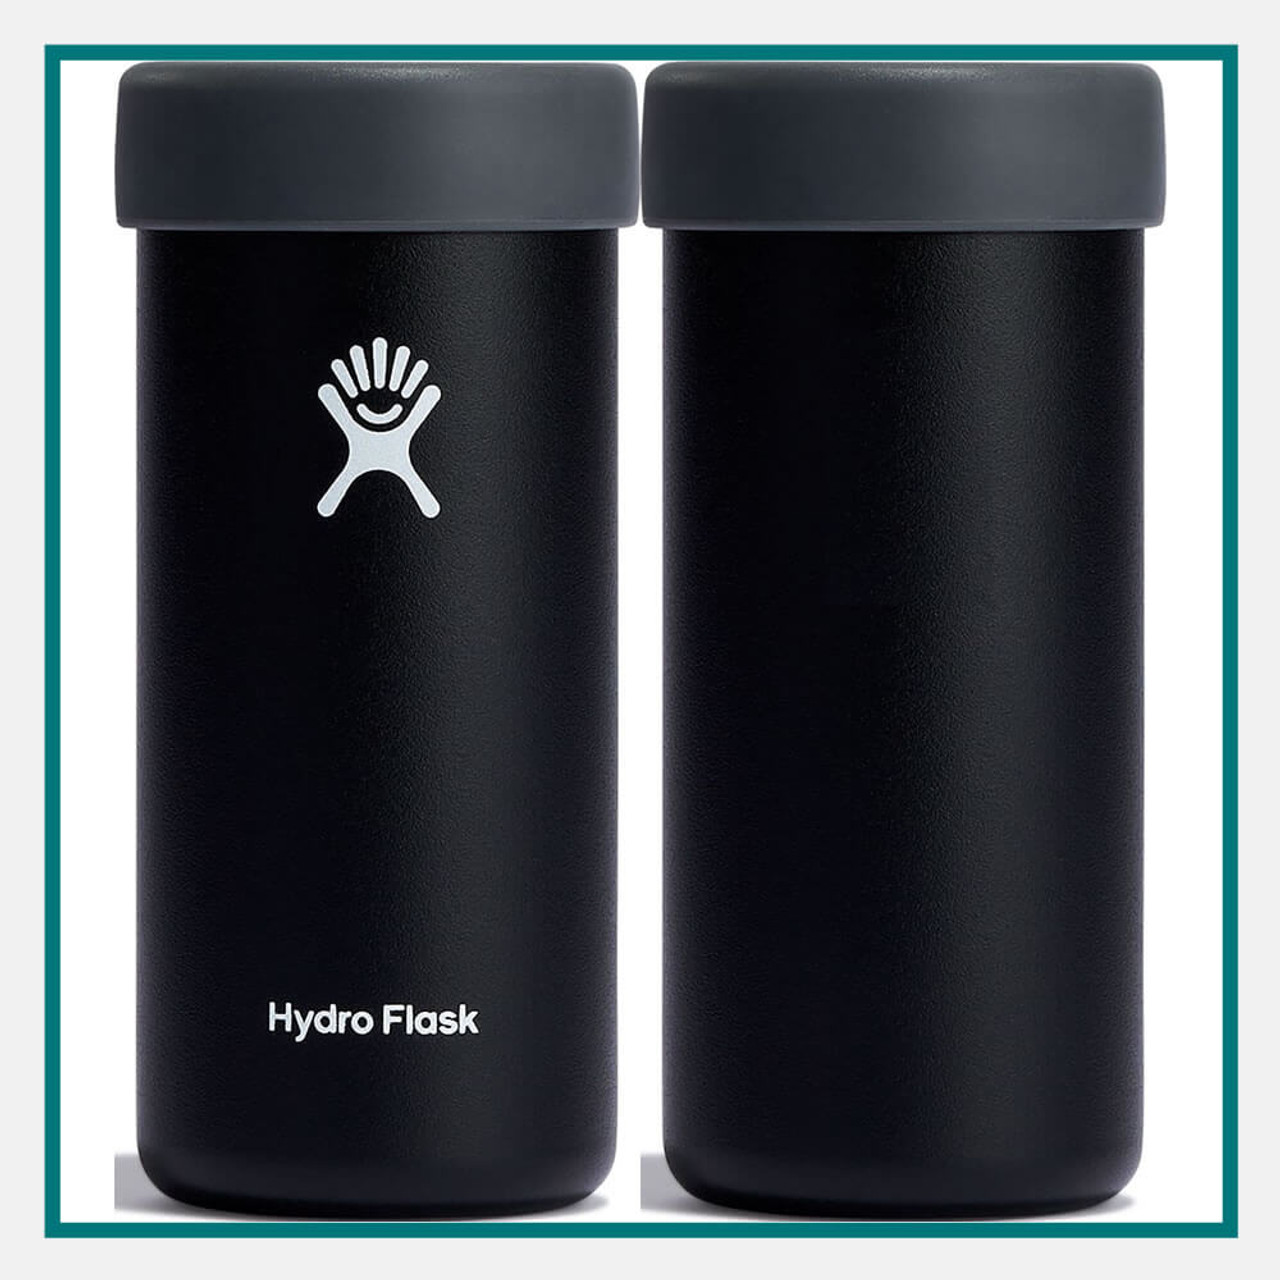 Hydro flask 12 oz Slim Cooler